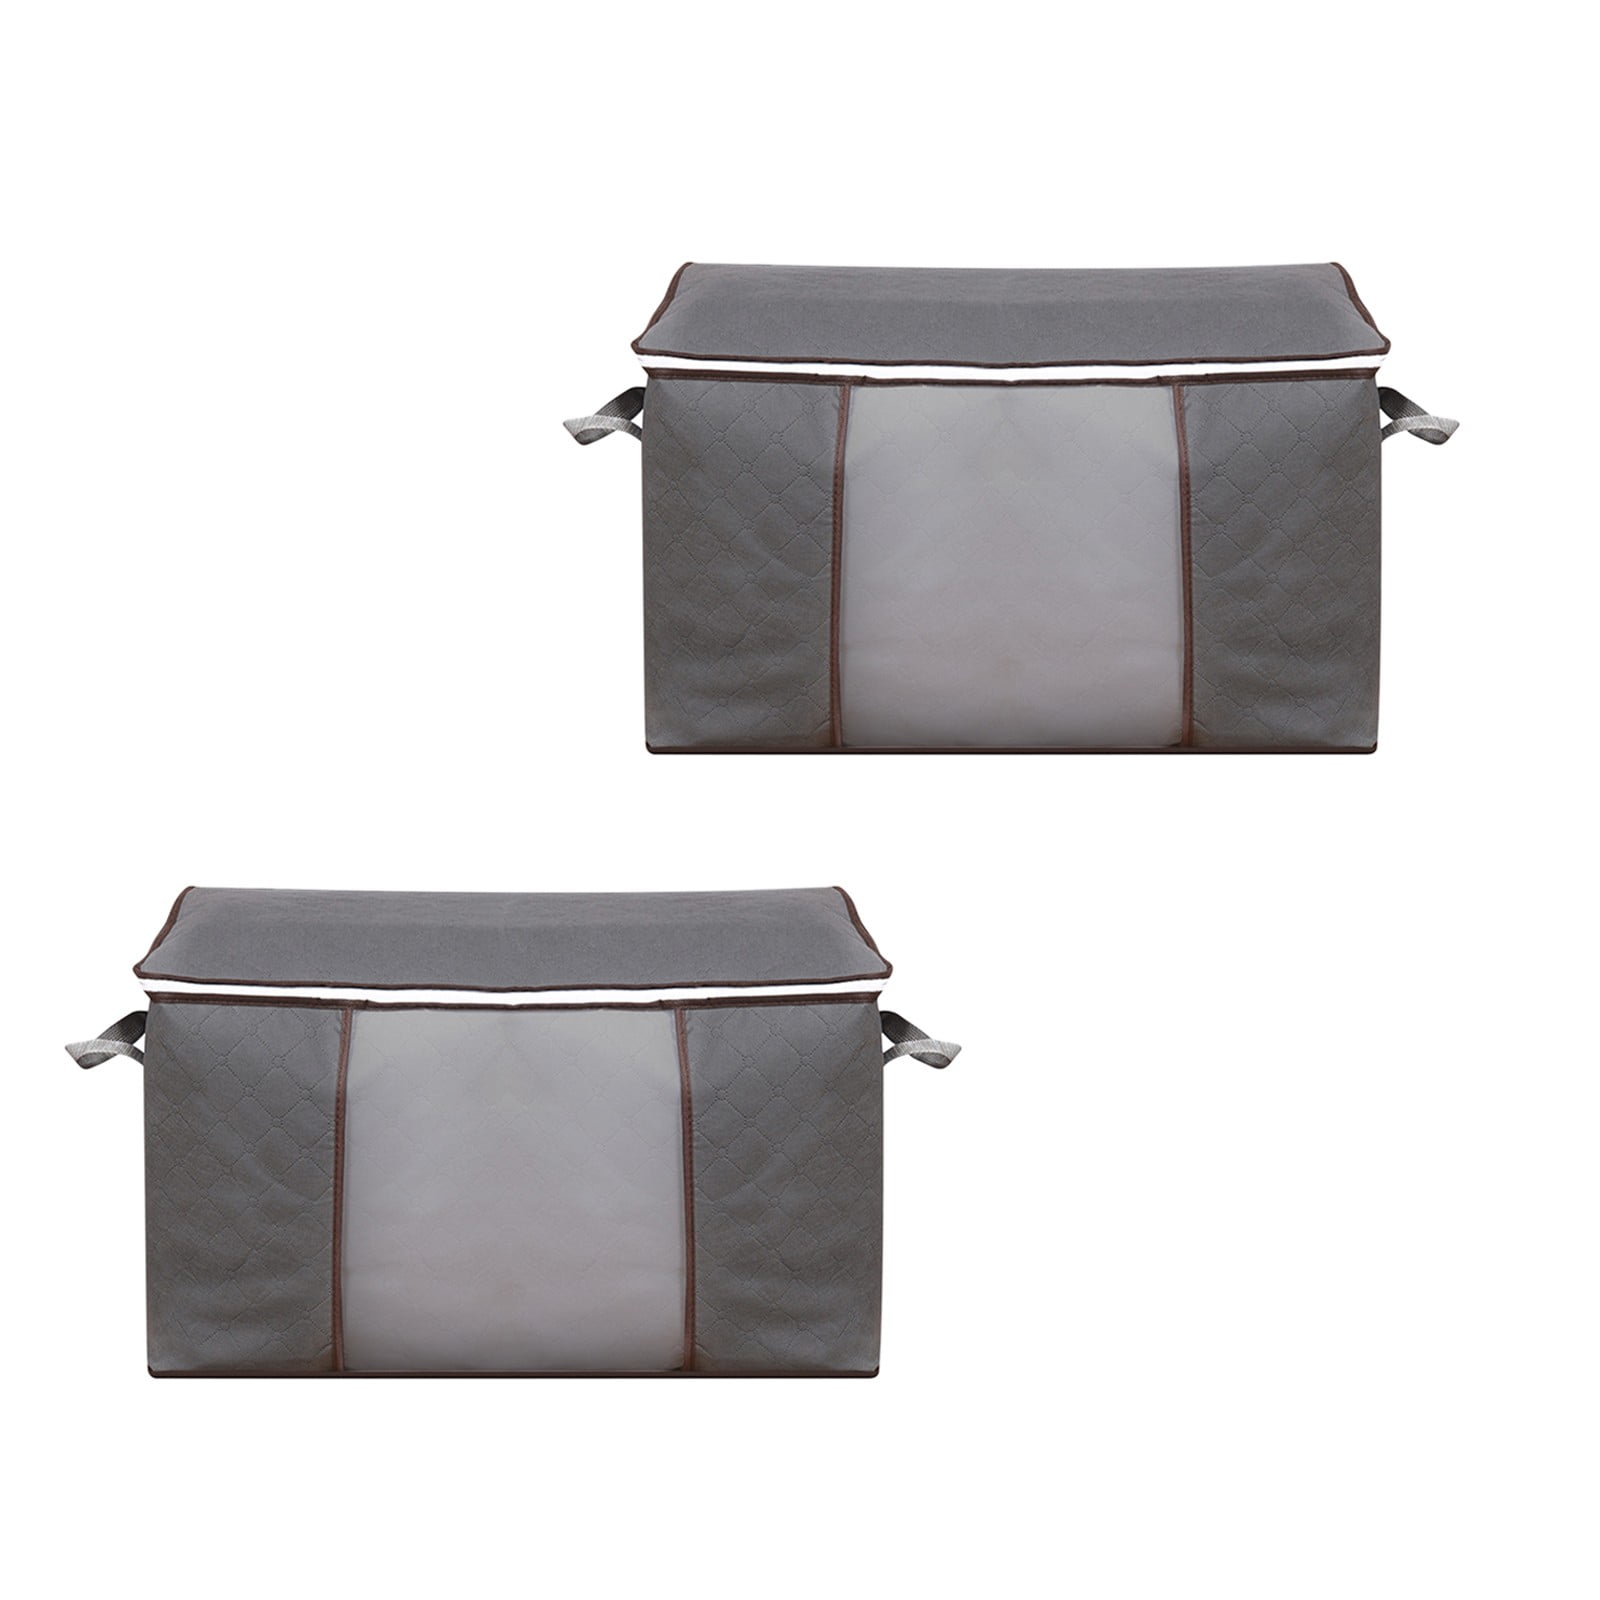 Moocorvic Comforter Storage Bag, Large Storage Bags for Comforters